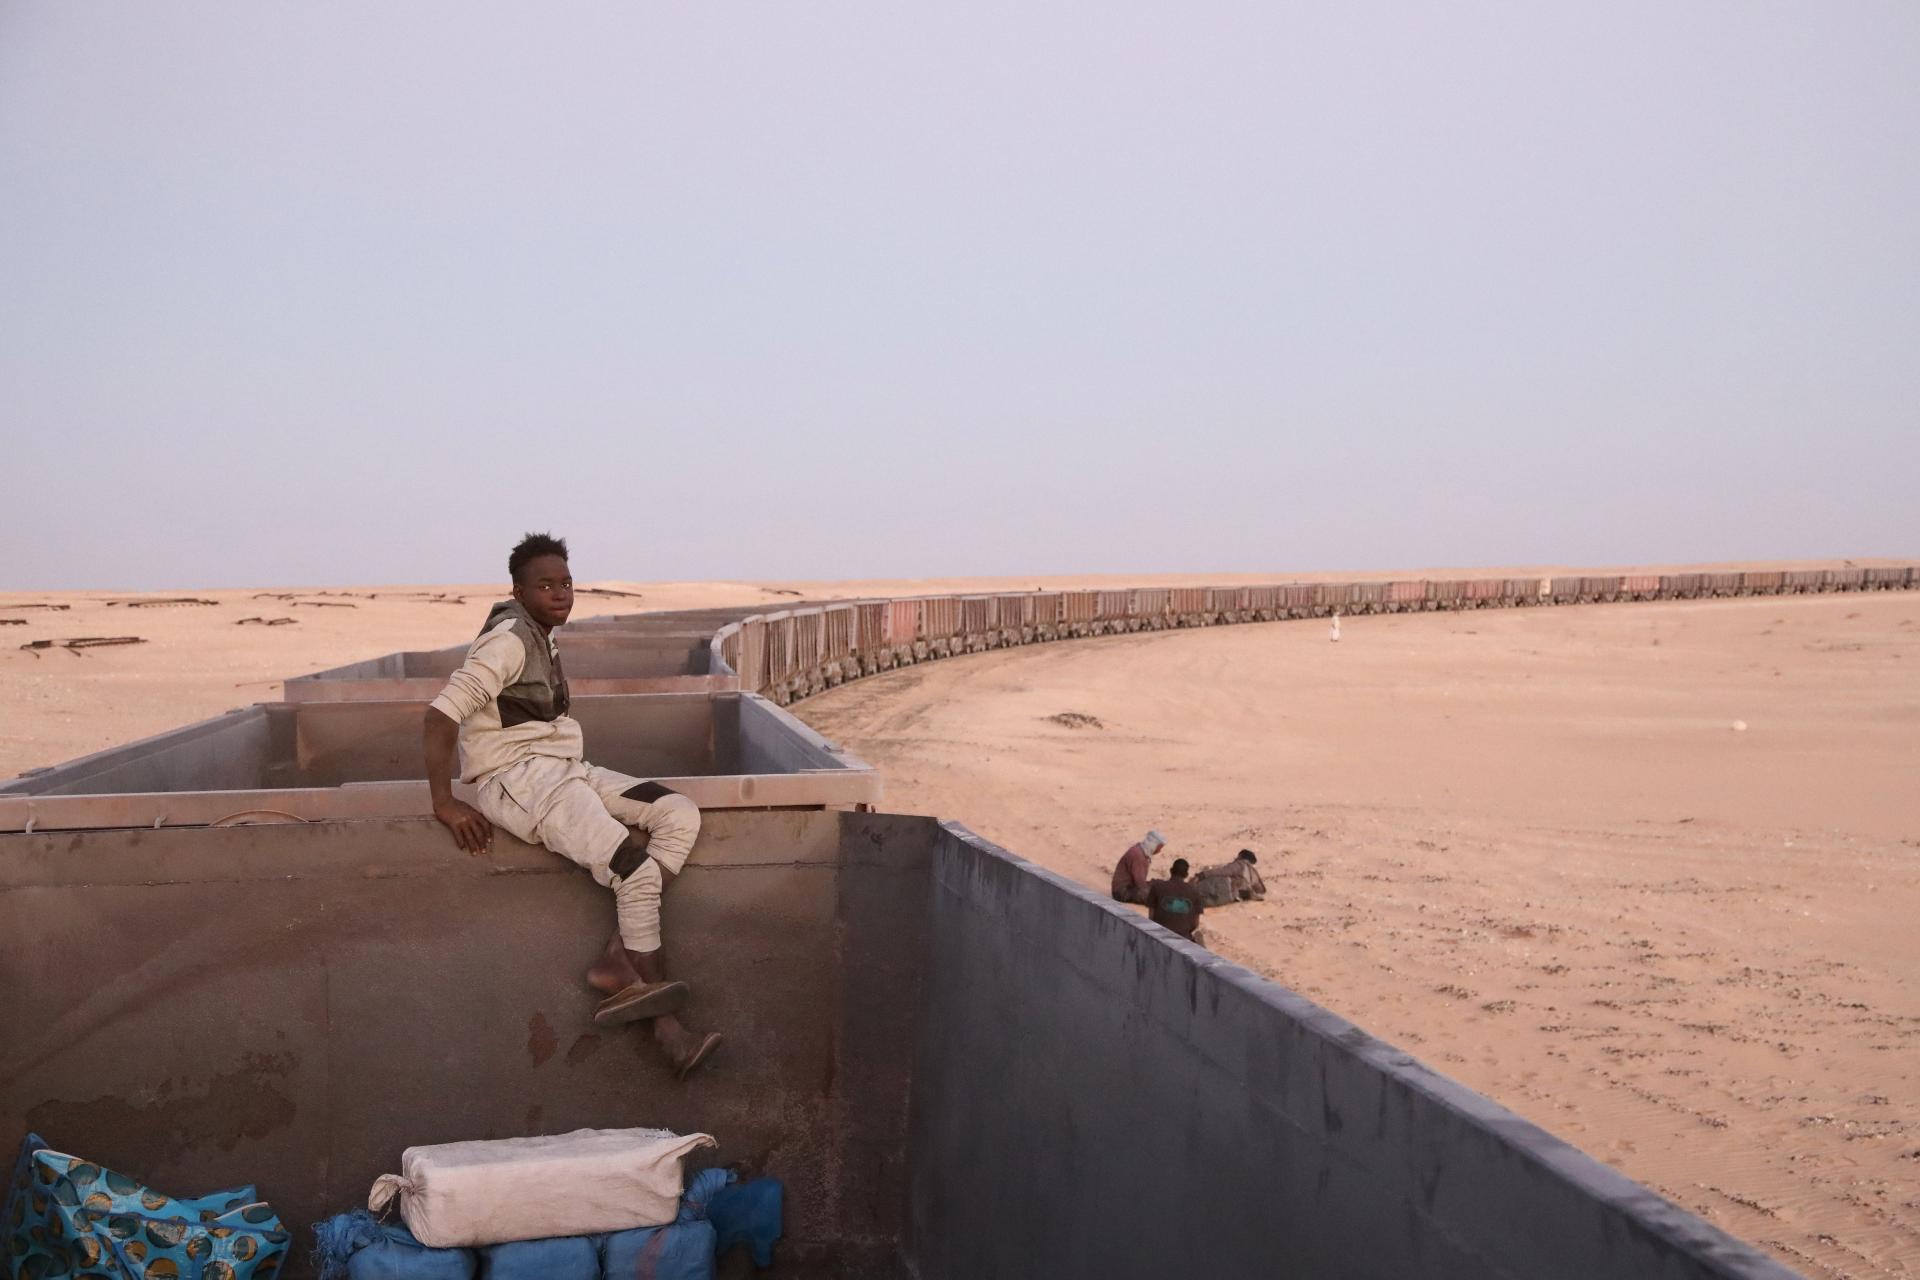 London Photography Awards Winner - crawling on the desert